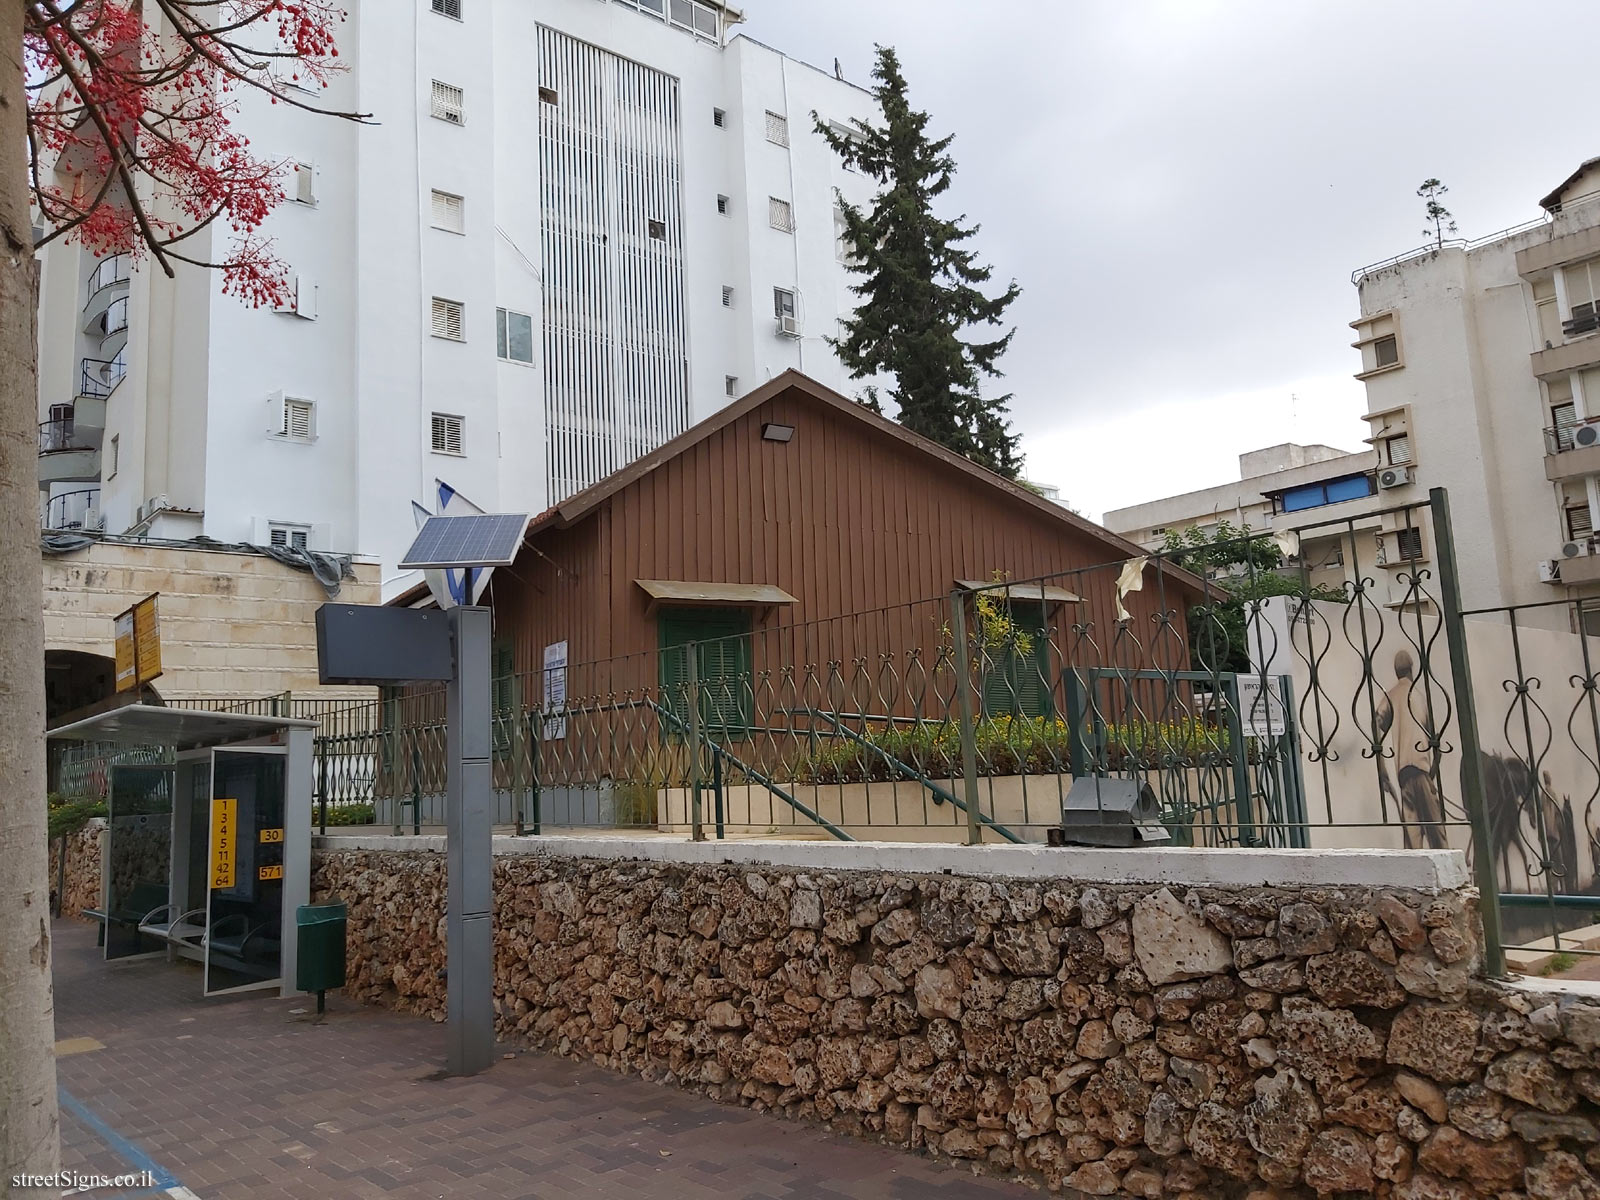 The first hut in Magdiel - Sokolov/HaYedidut, Hod Hasharon, Israel